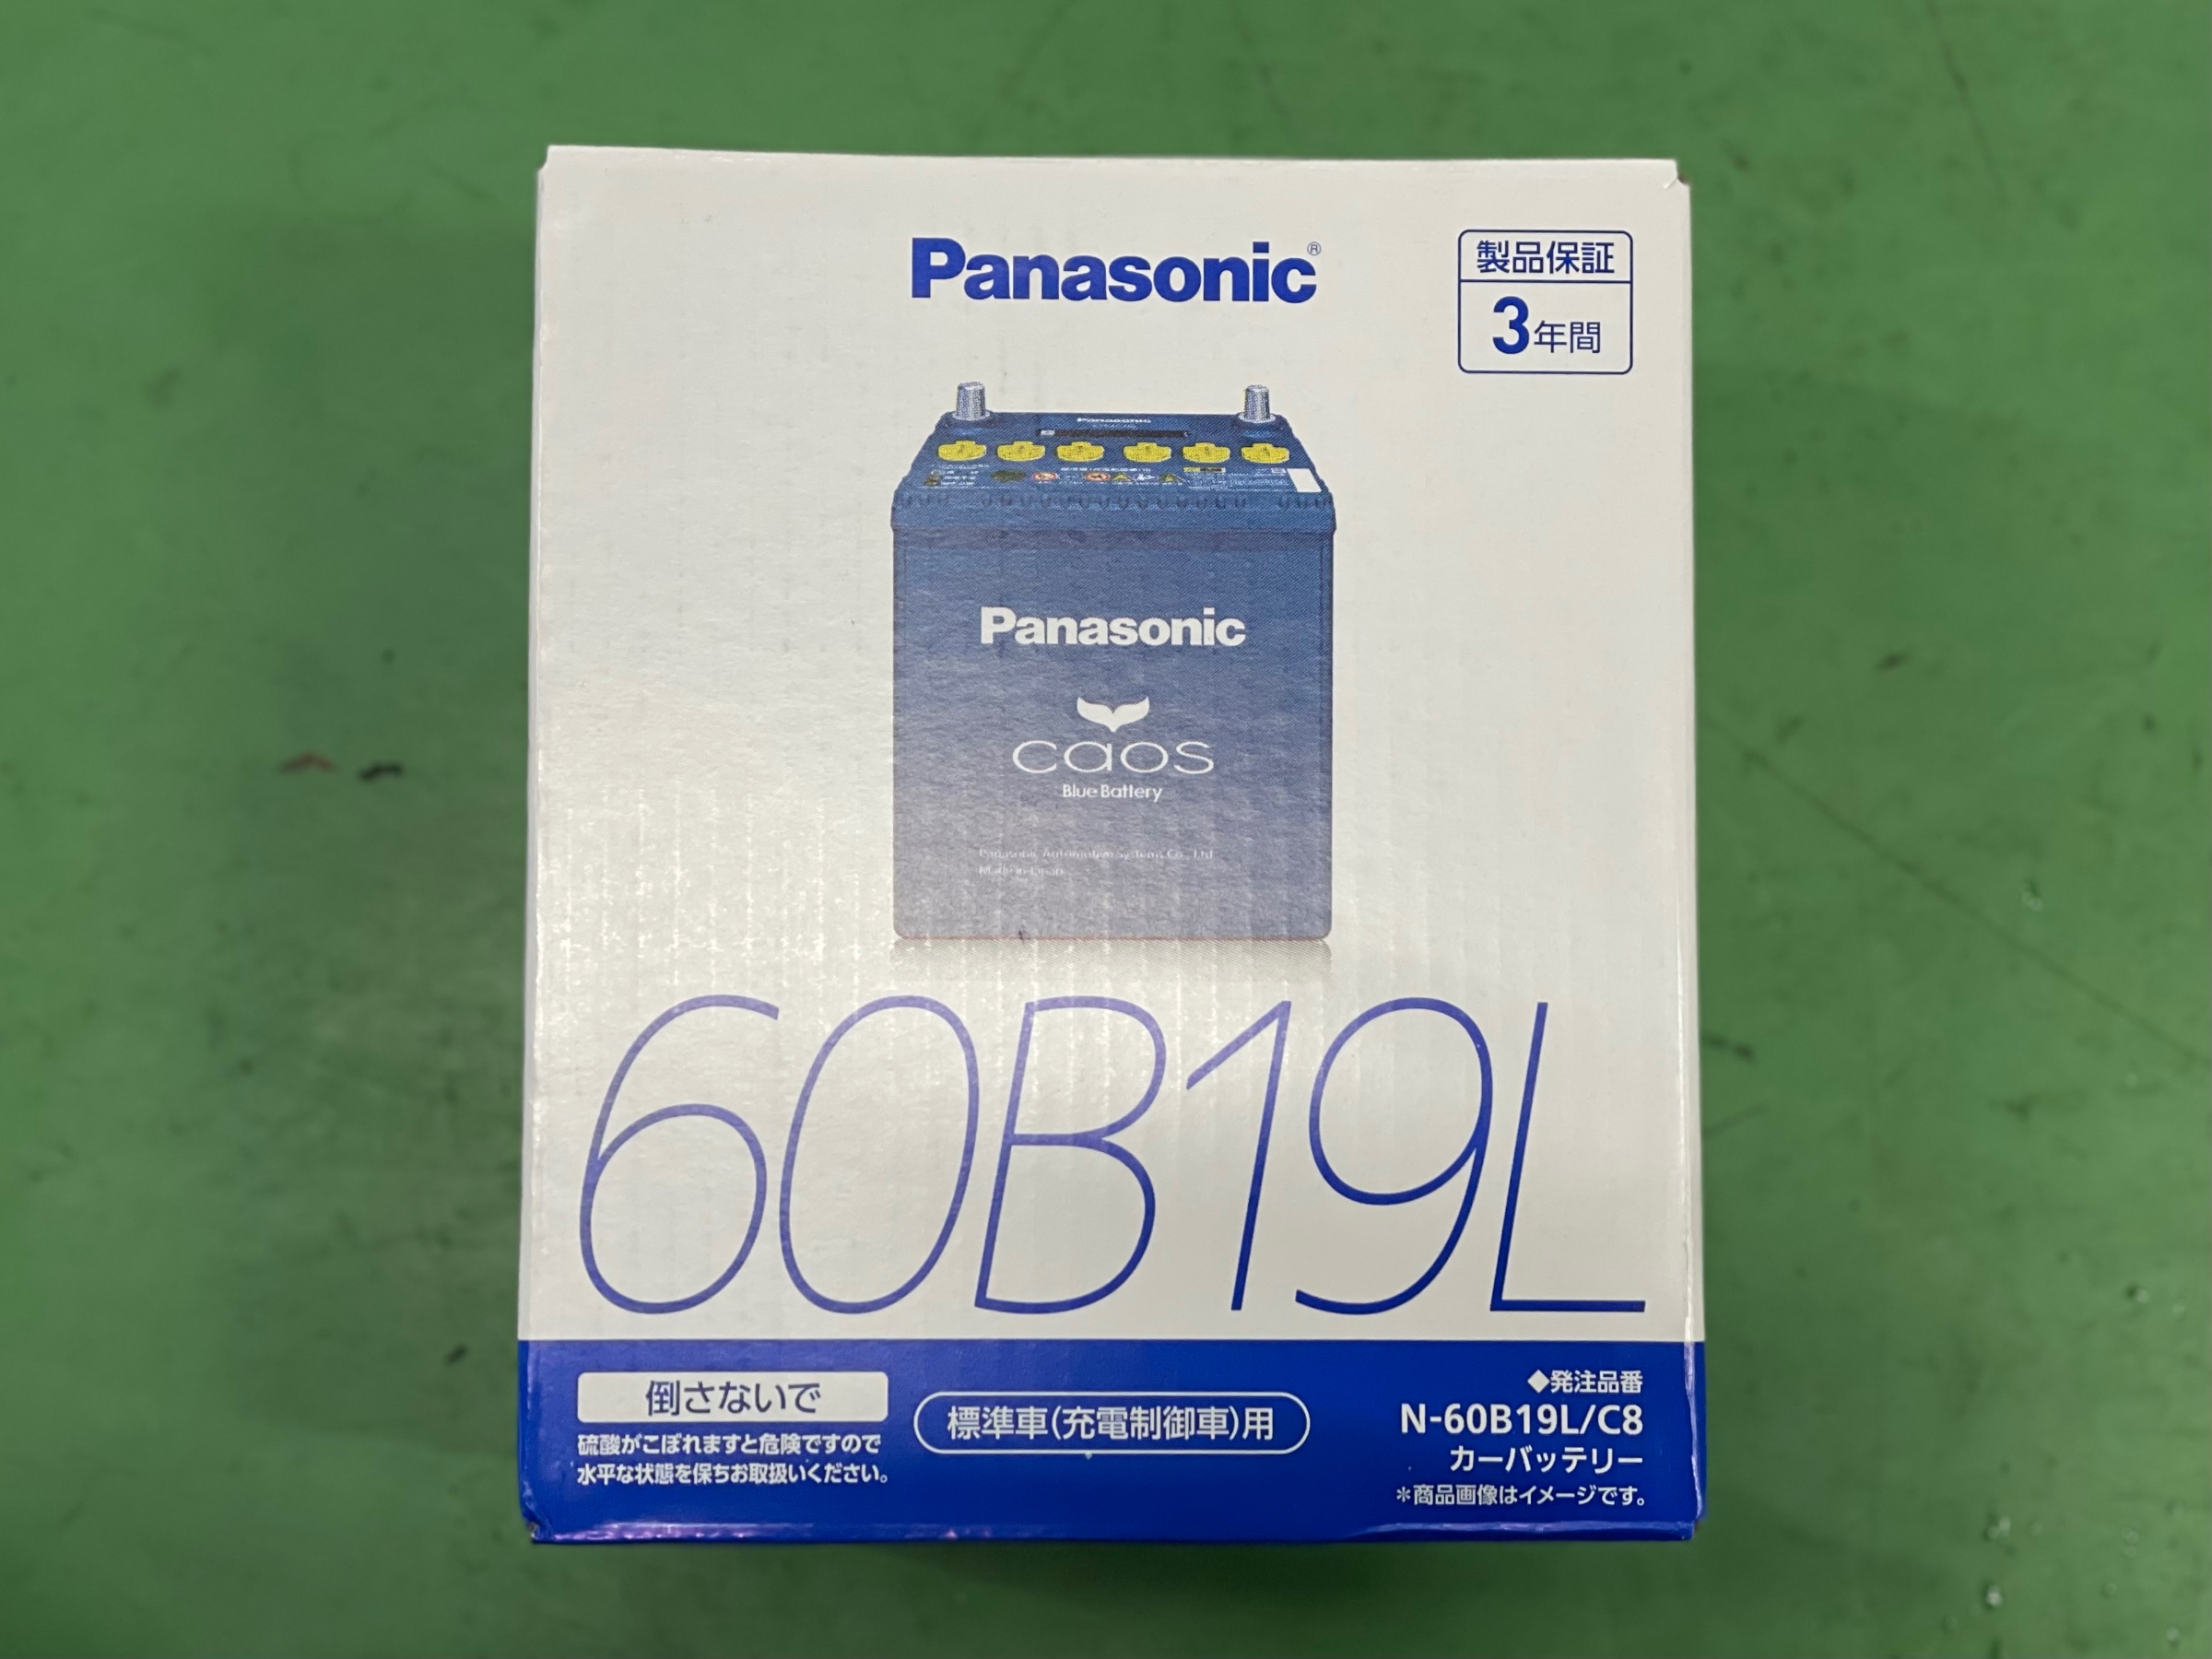 Panasonic caos Blue Battery パナソニック カオス ブルー バッテリー